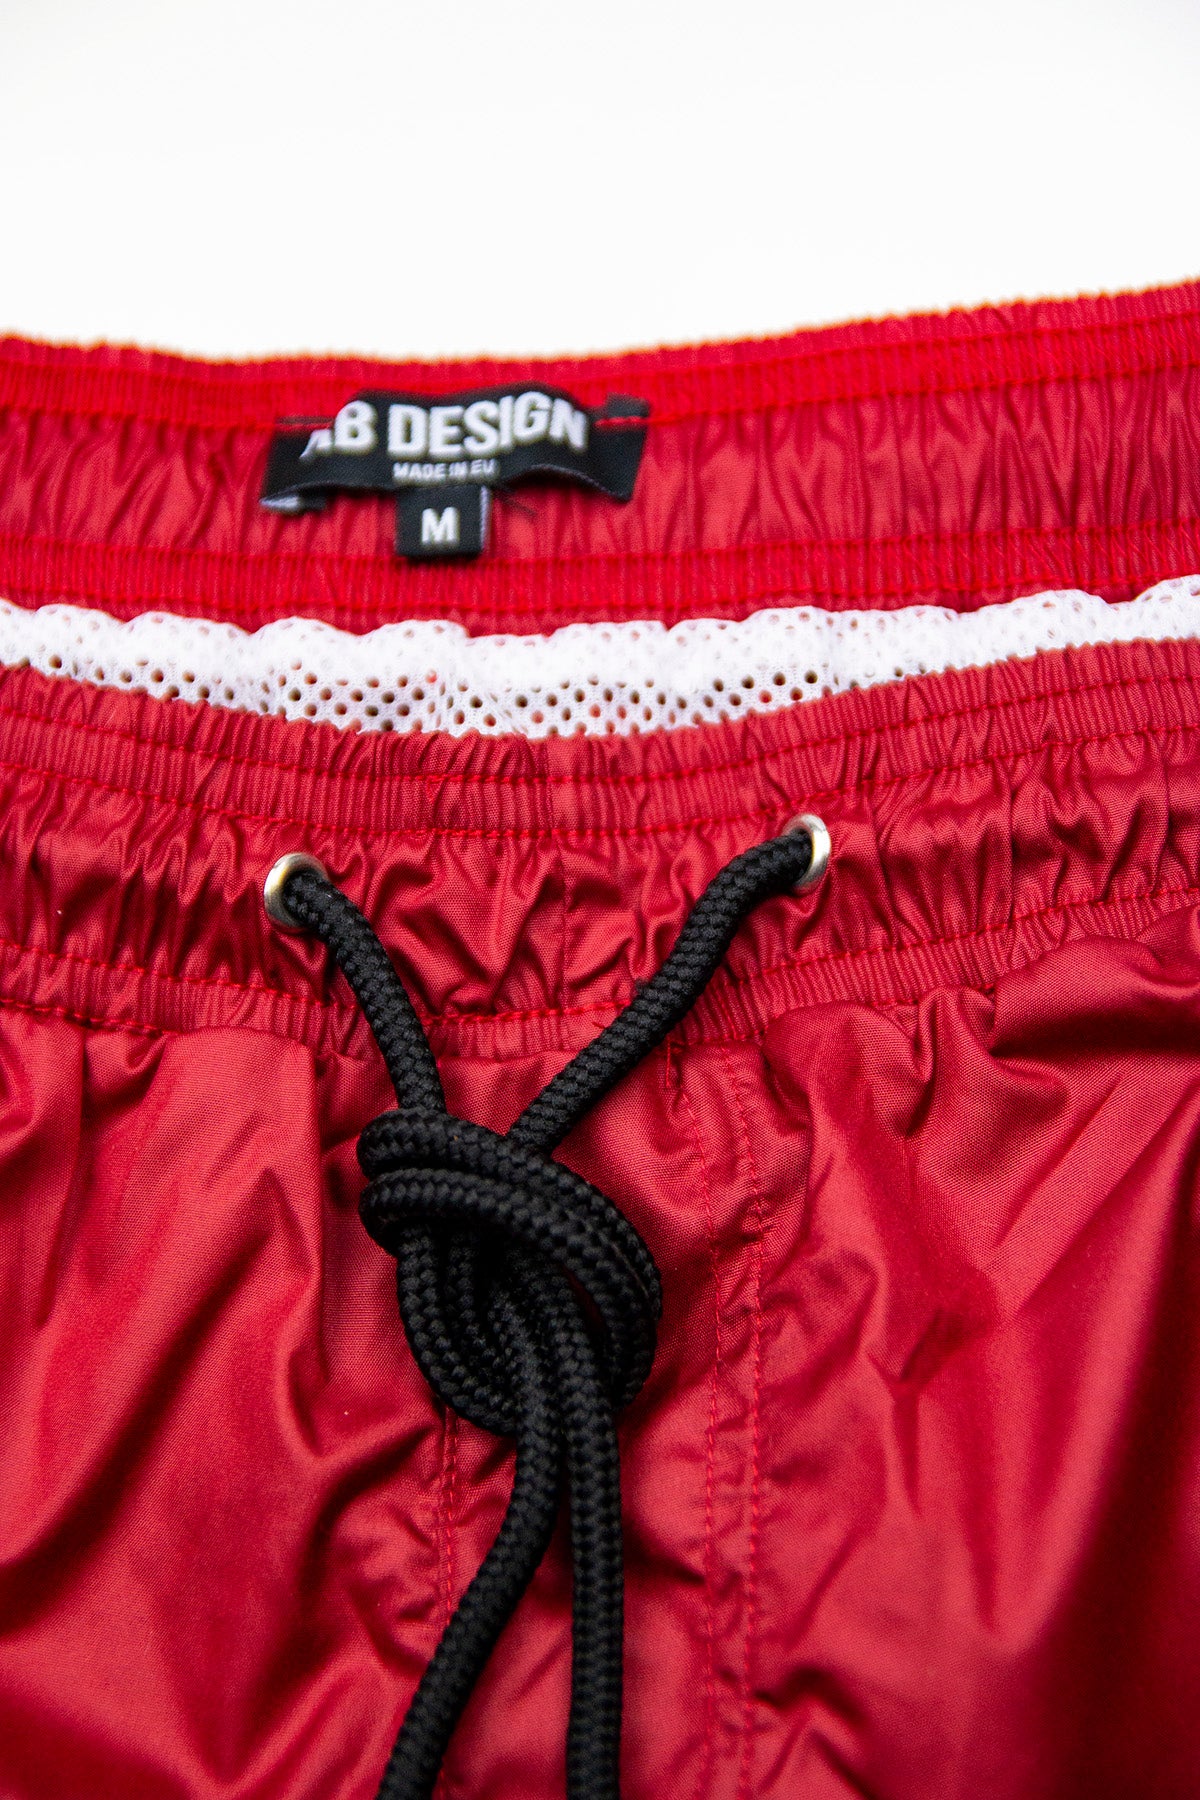 Bundle 3 - Red Beach Shorts + Black Hat White Logo + Tank Top MD934